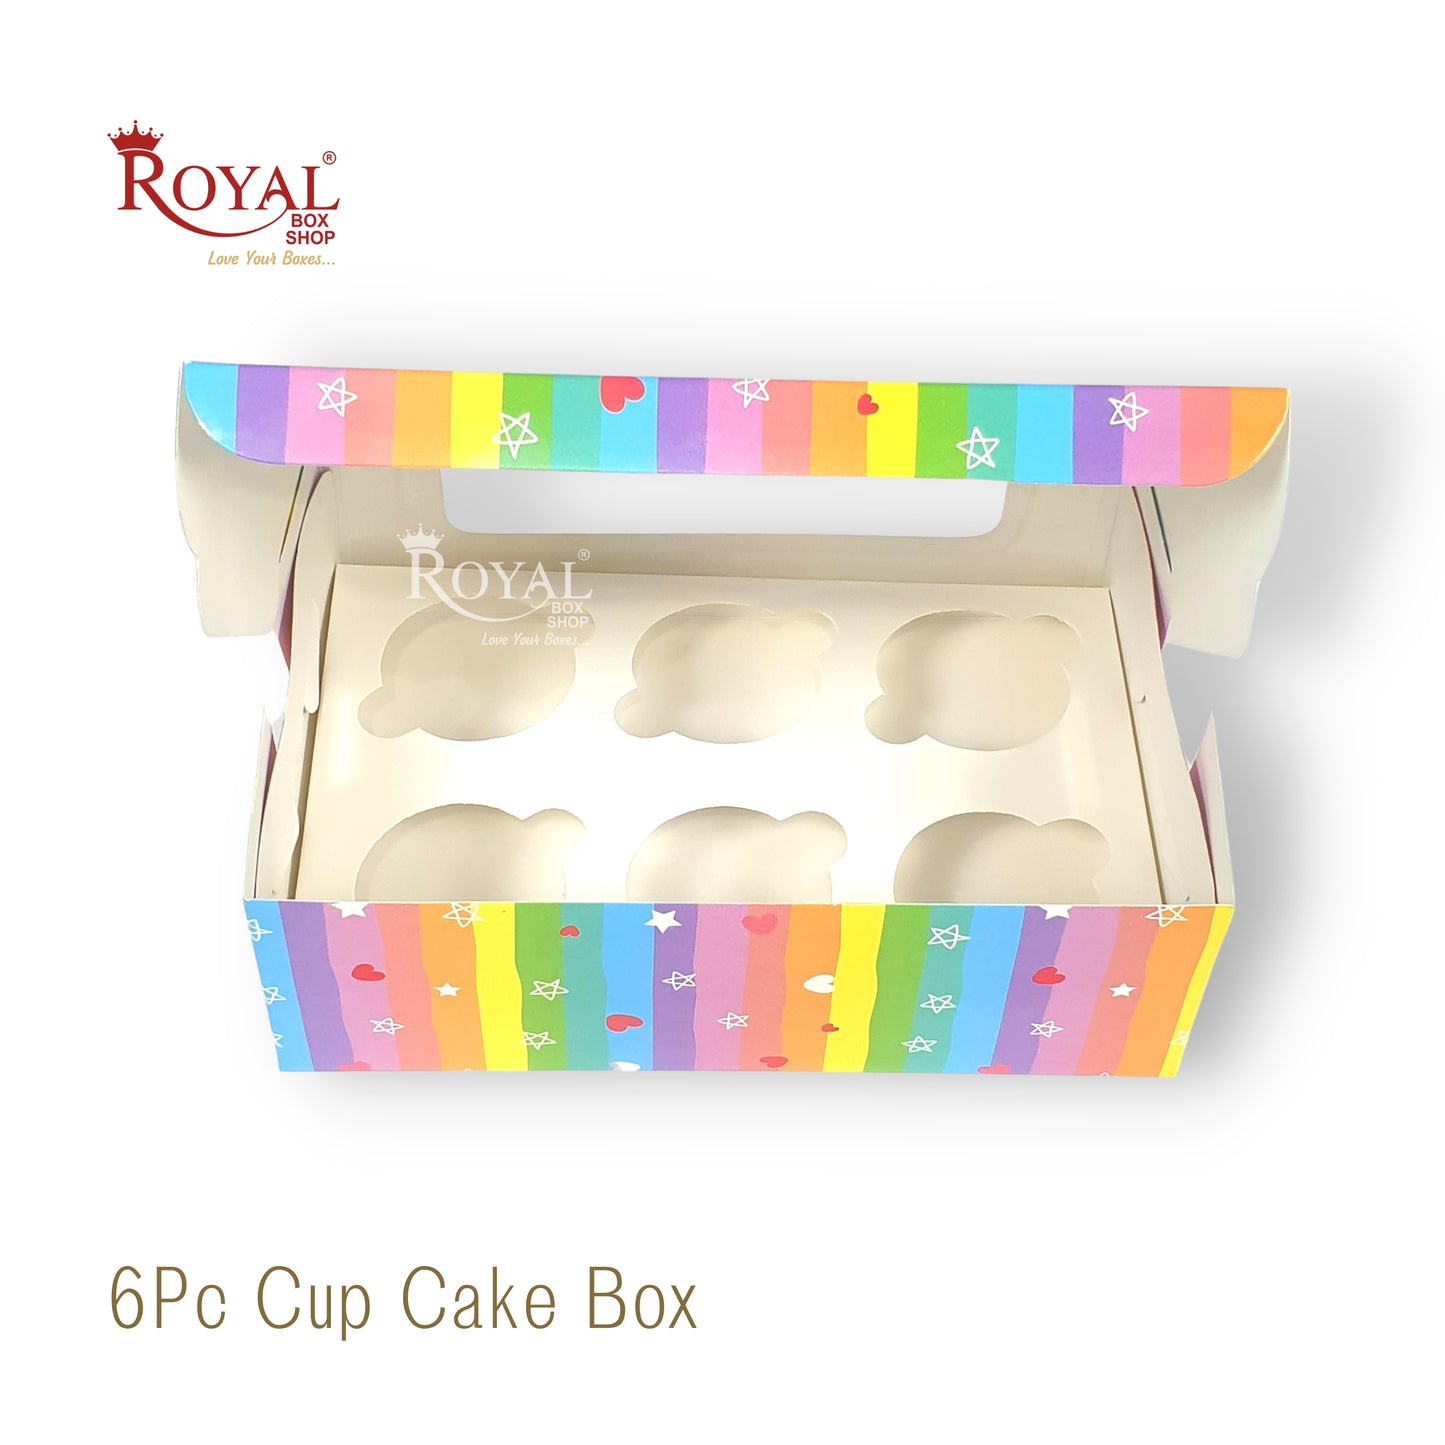 6pc Cupcake Box With Window I Size 10"x6.75"x3.5" I Rainbow Theme I For Christmas, New Year, Valentine Gifting